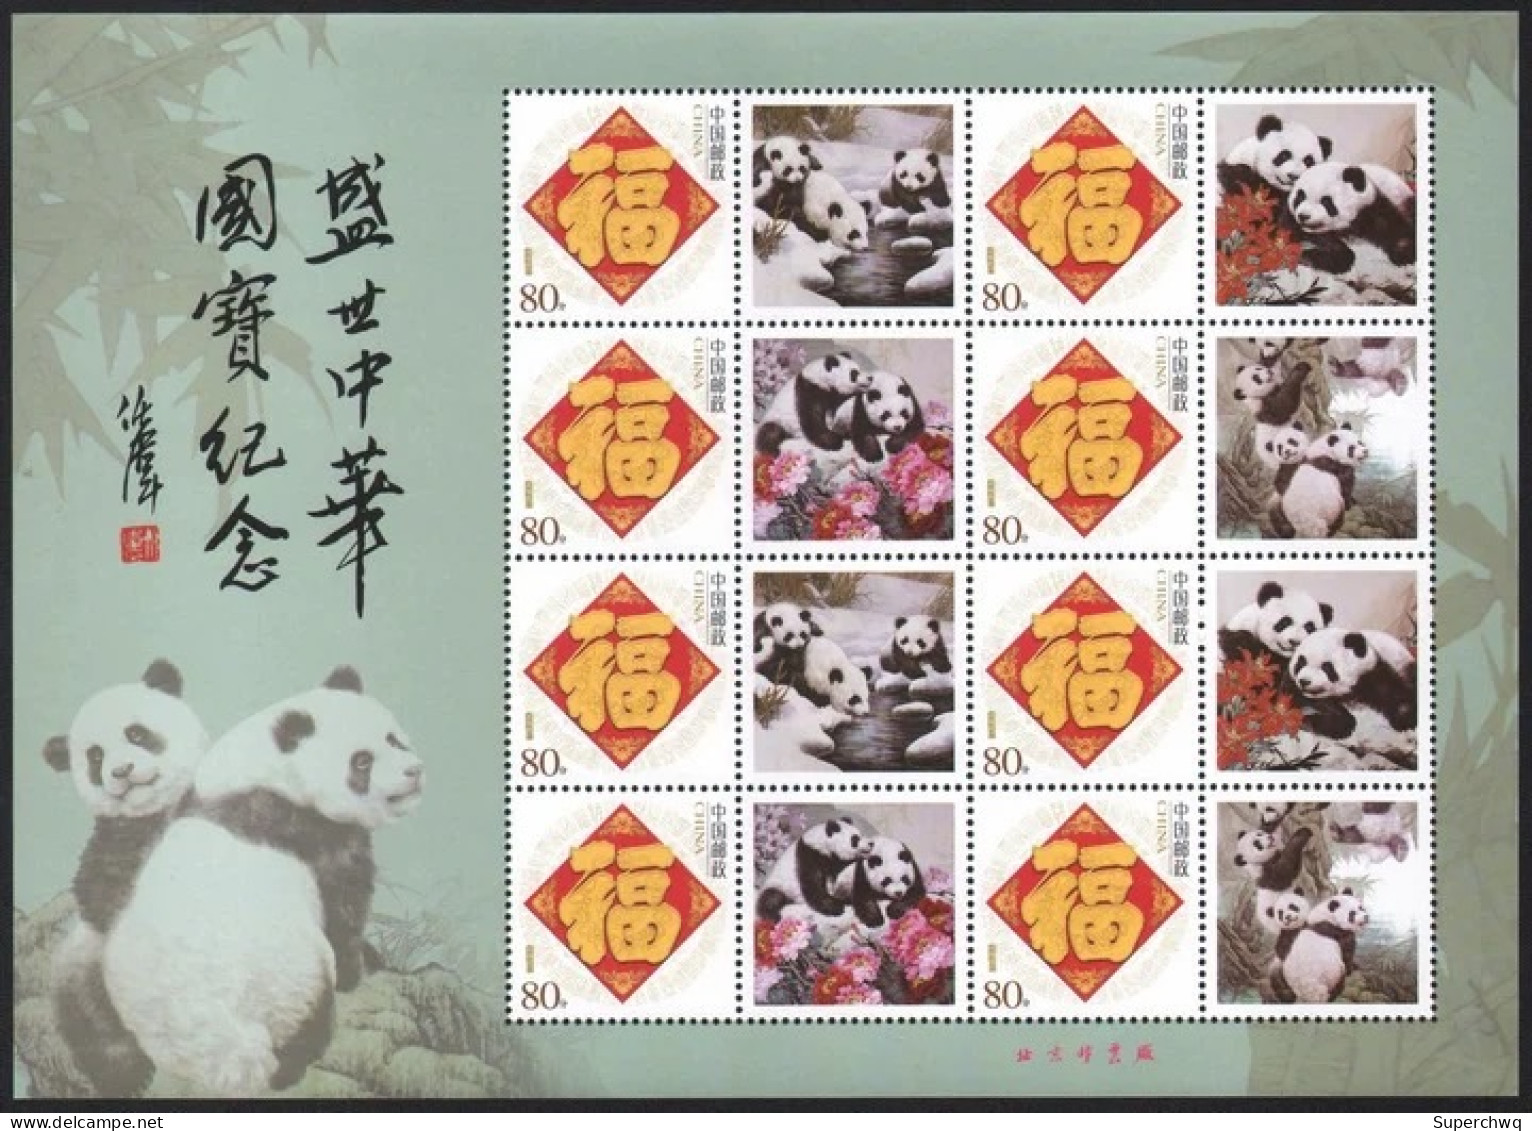 China Personalized Stamp  MS MNH,Modern Painter Ren Wei's Paintings Of Chinese National Treasure Pandas In The Prosperou - Ongebruikt